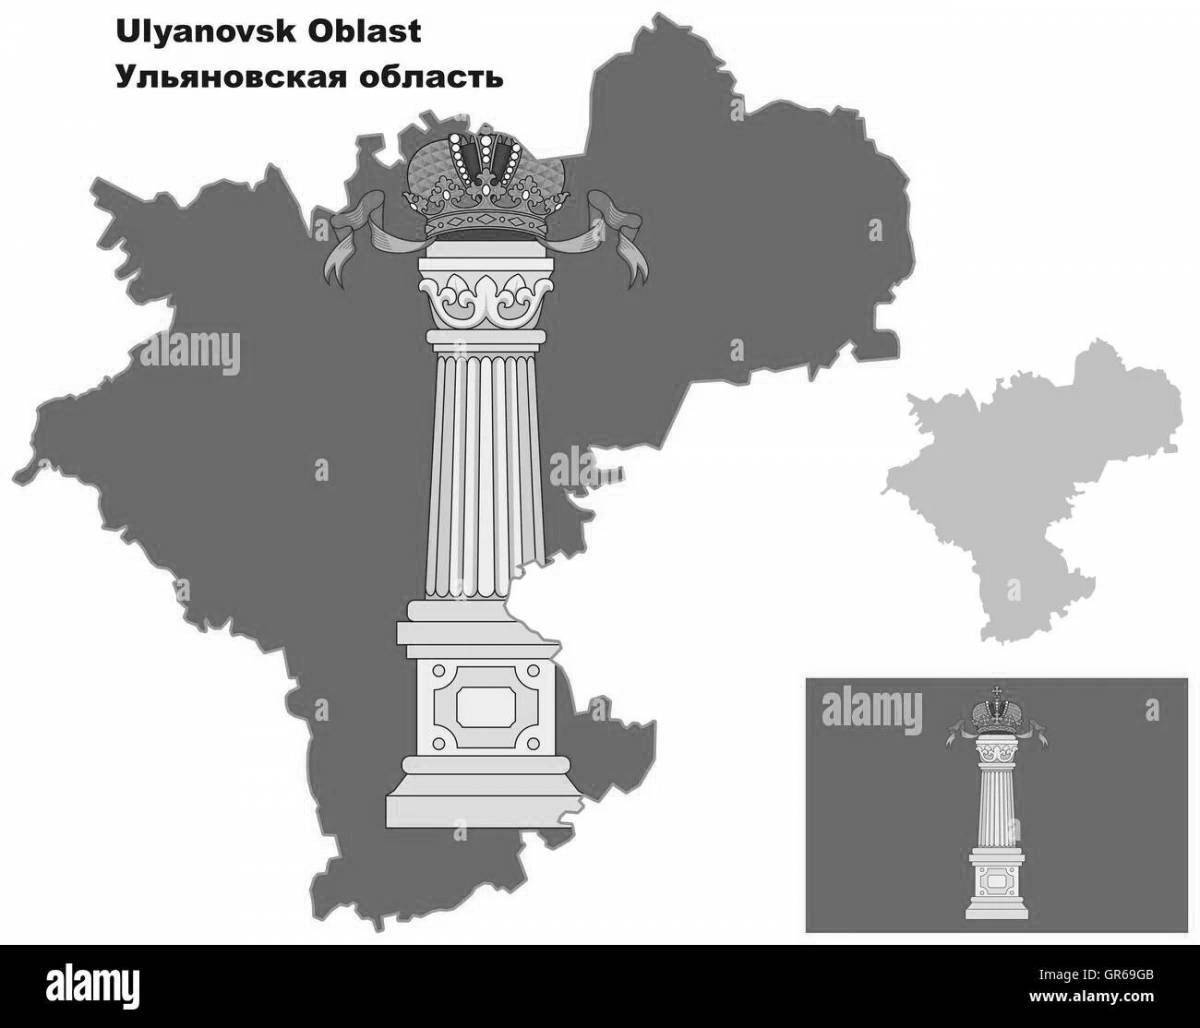 Excellent map of Ulyanovsk region